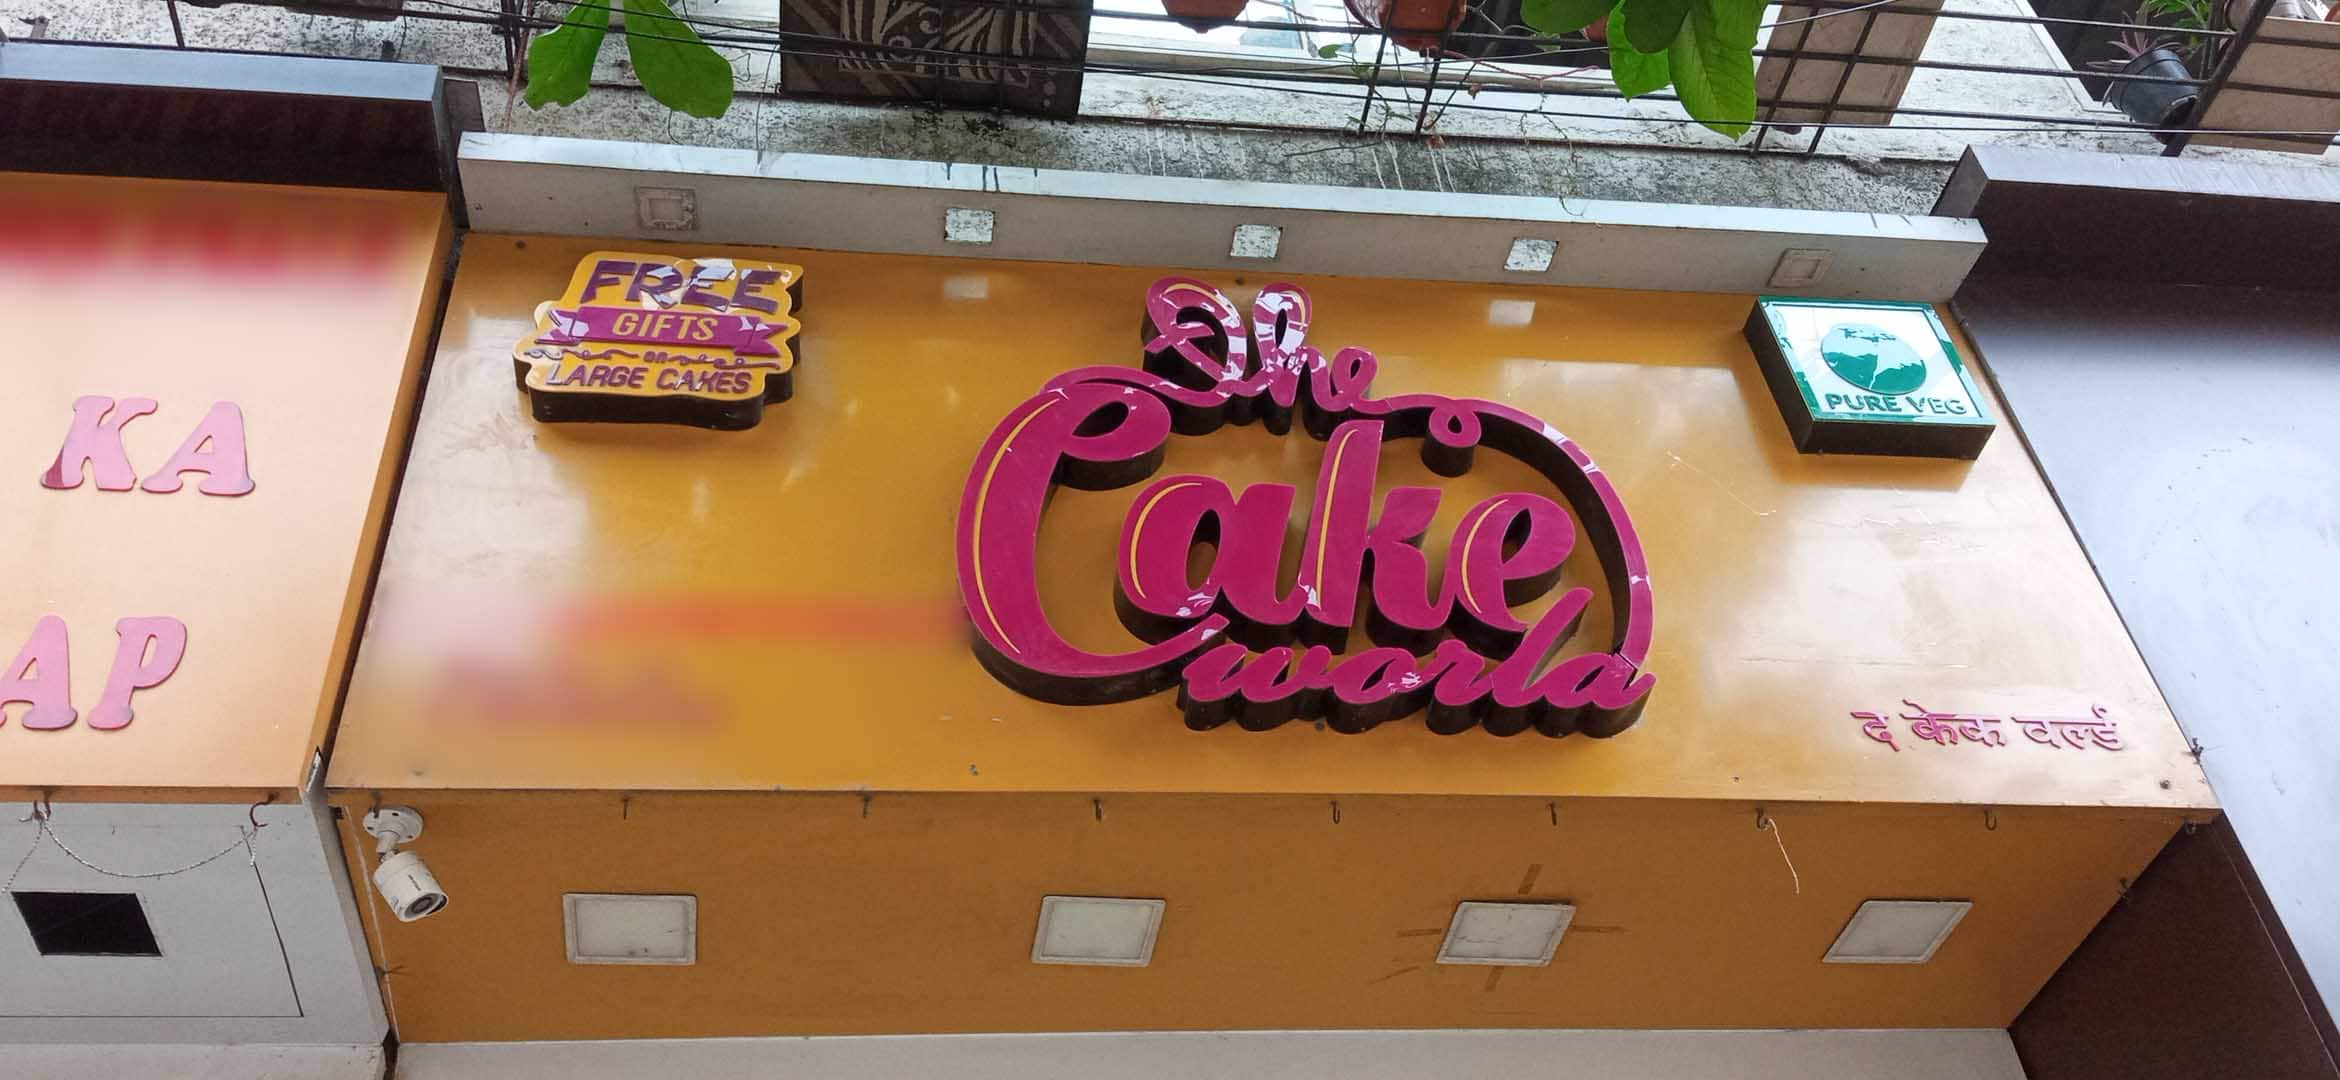 Cake Of The Day in Panvel,Mumbai - Best Cake Shops in Mumbai - Justdial